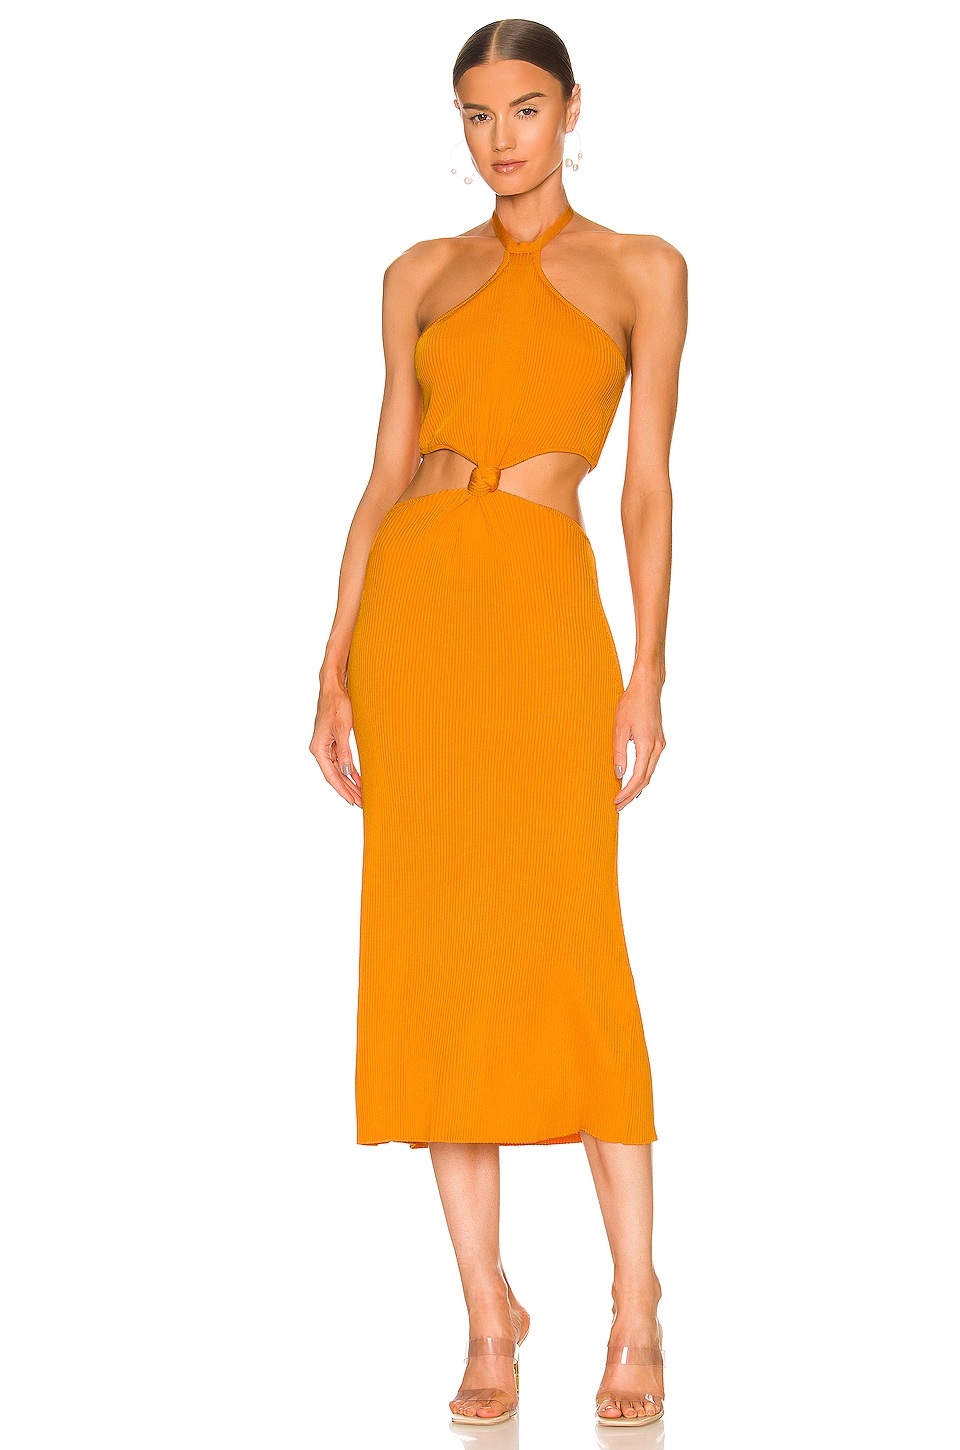 Cameron Knit Dress in Tangerine. Revolve Women Clothing Dresses Knitted Dresses 